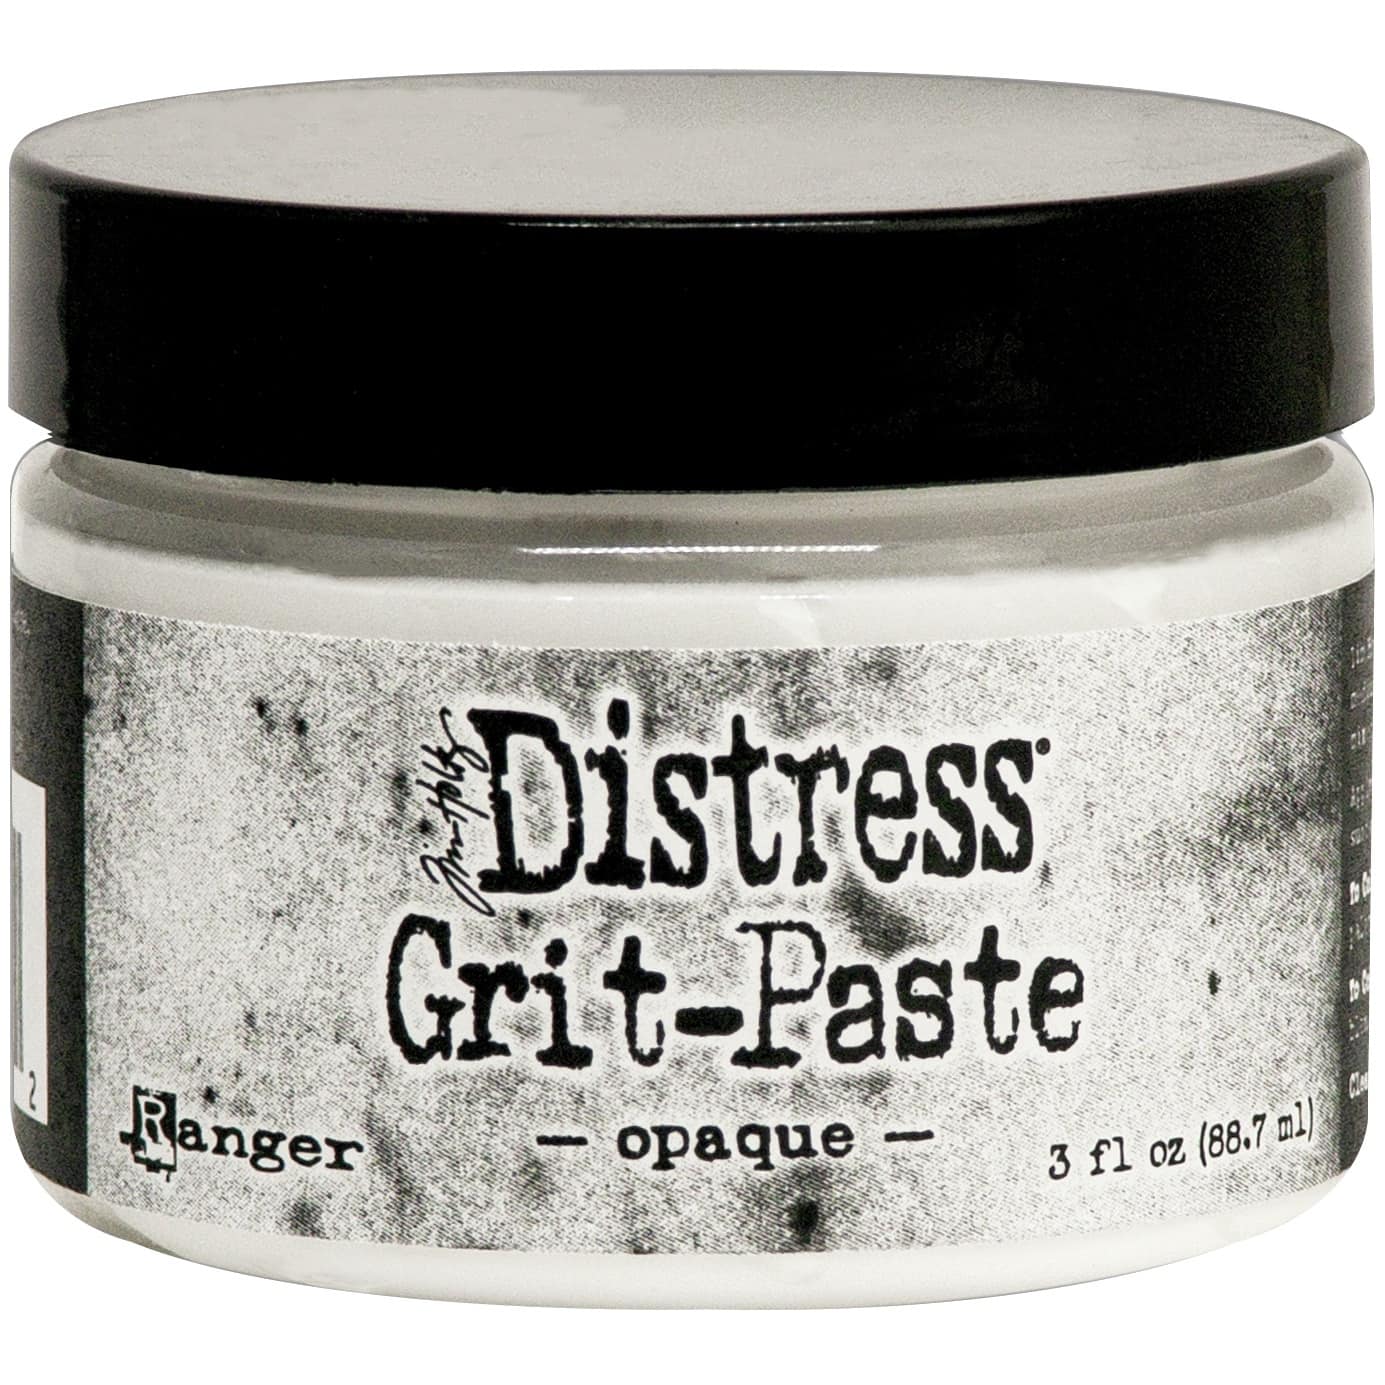 Tim Holtz&#xAE; Distress Opaque Grit Paste